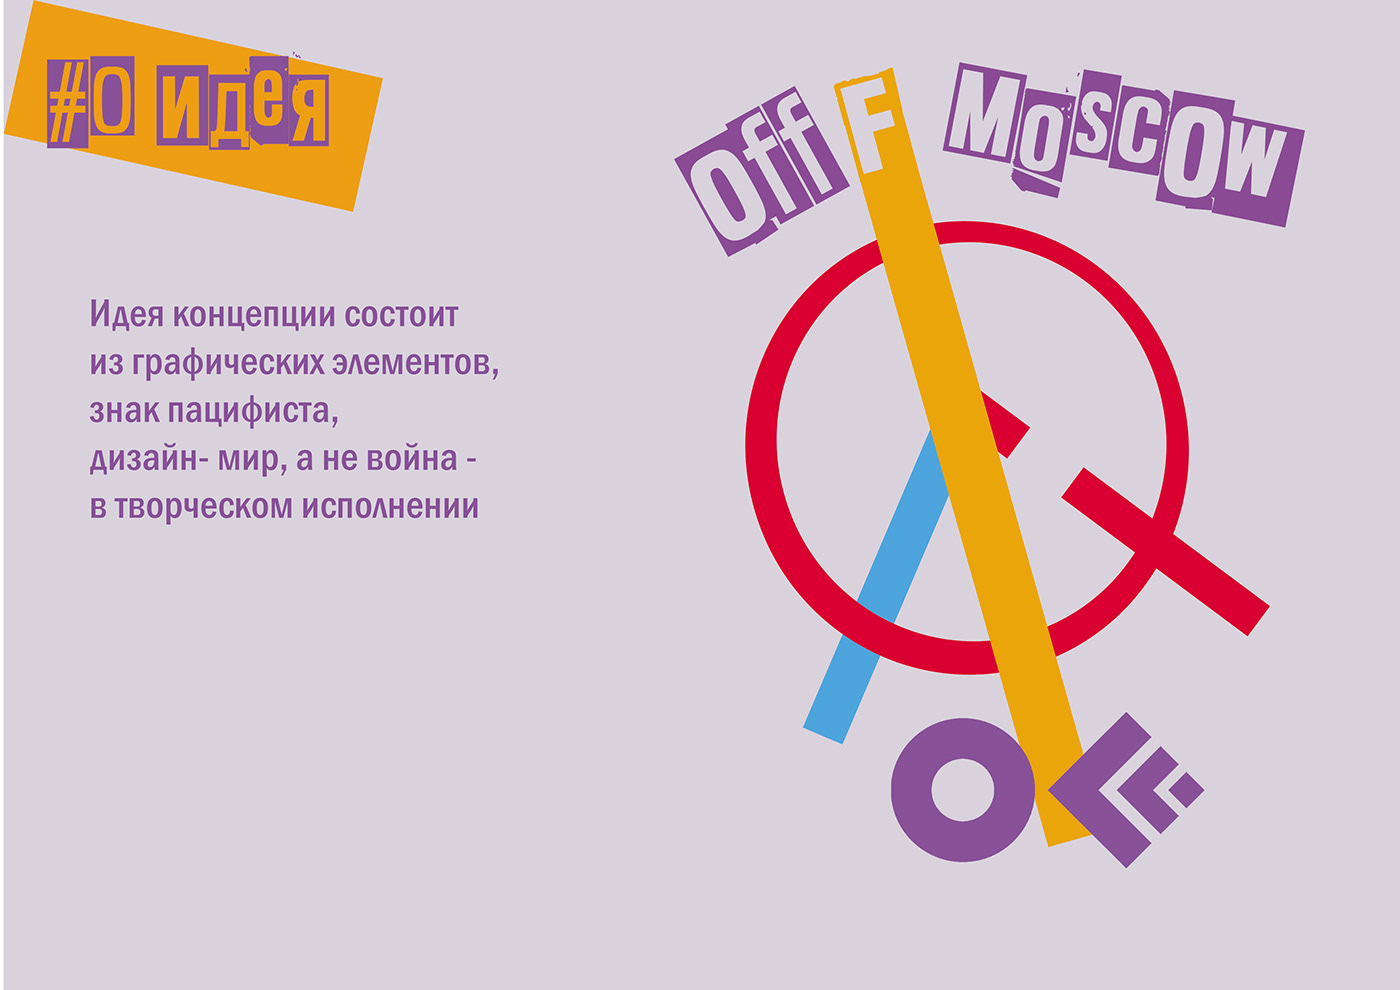 OFFF OFFF festival offf Moscow peace ukraine War artwork